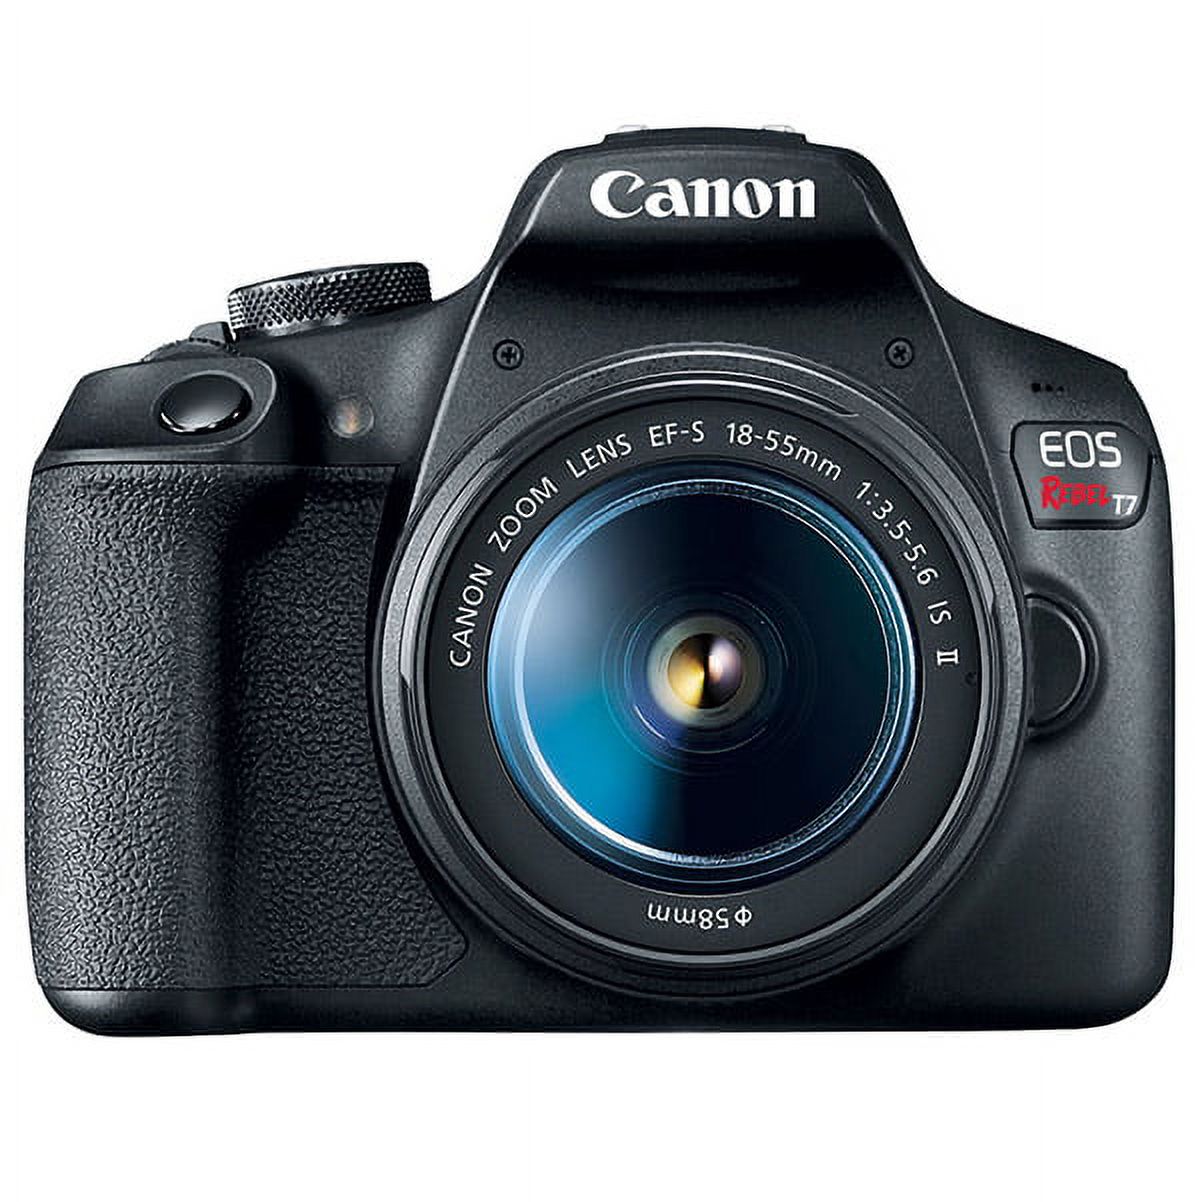 Canon EOS Rebel T7 DSLR Camera W/ 18-55mm Lens 2727C002 - Advanced Bundle (New) - image 2 of 7